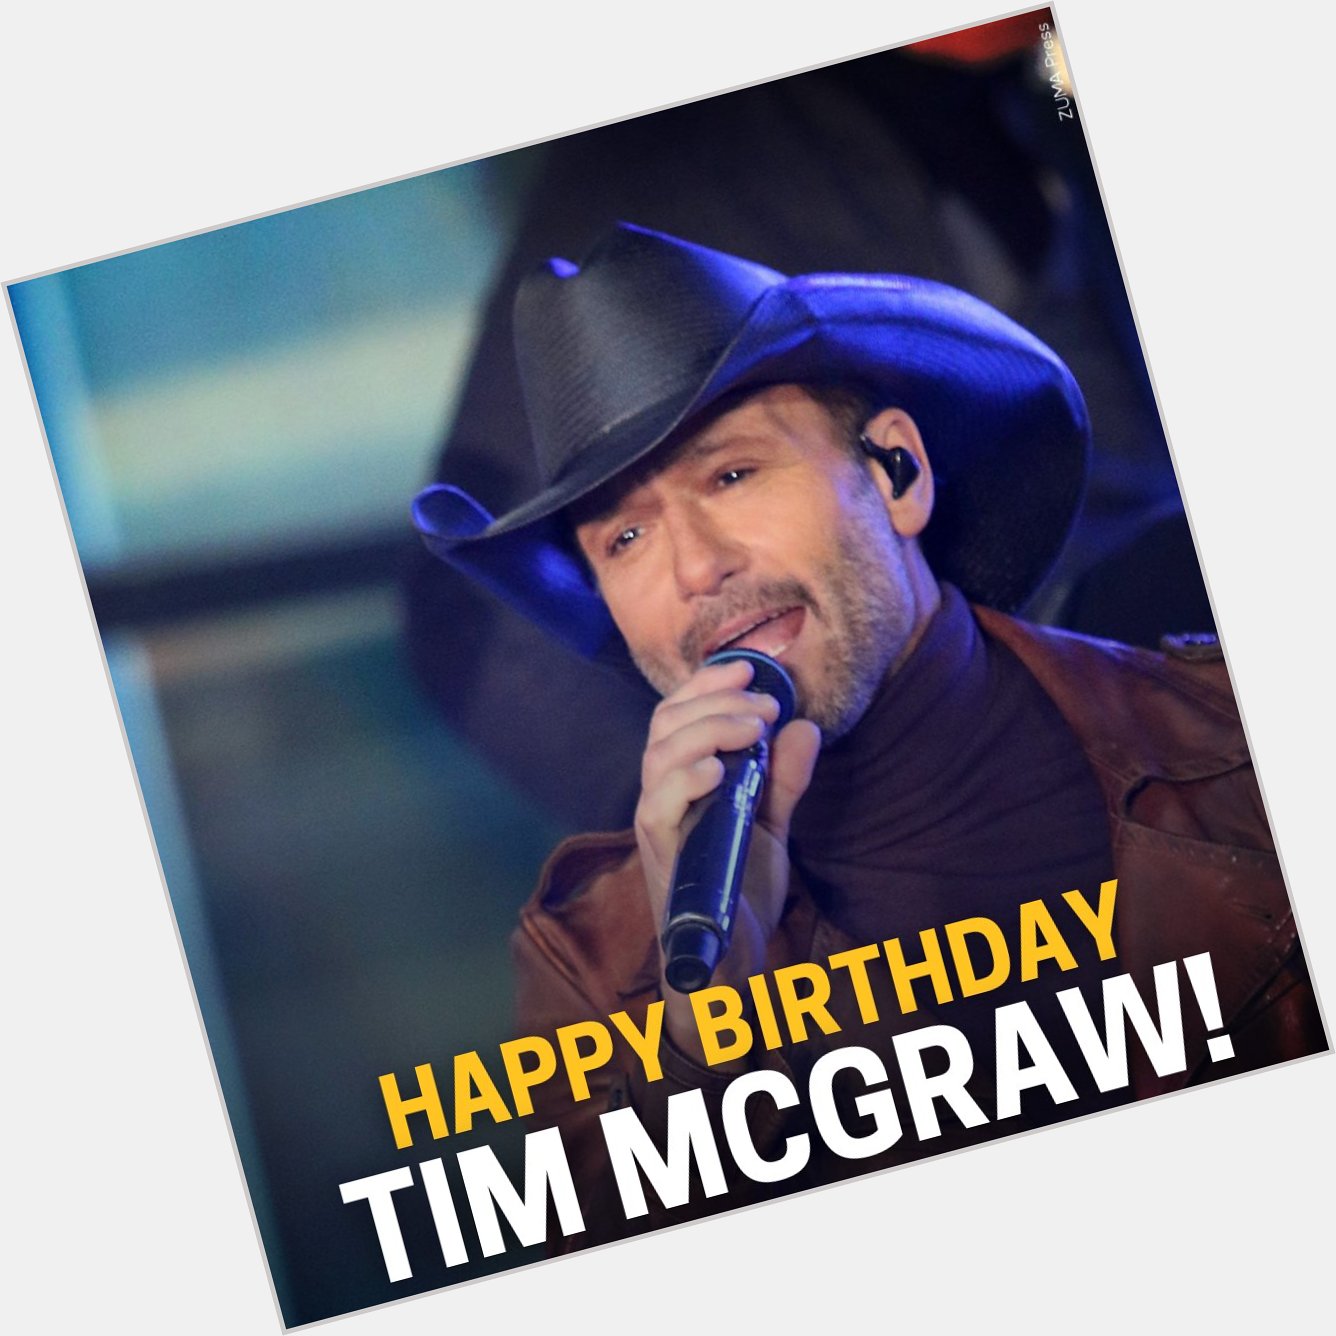 Happy birthday, Tim McGraw!  